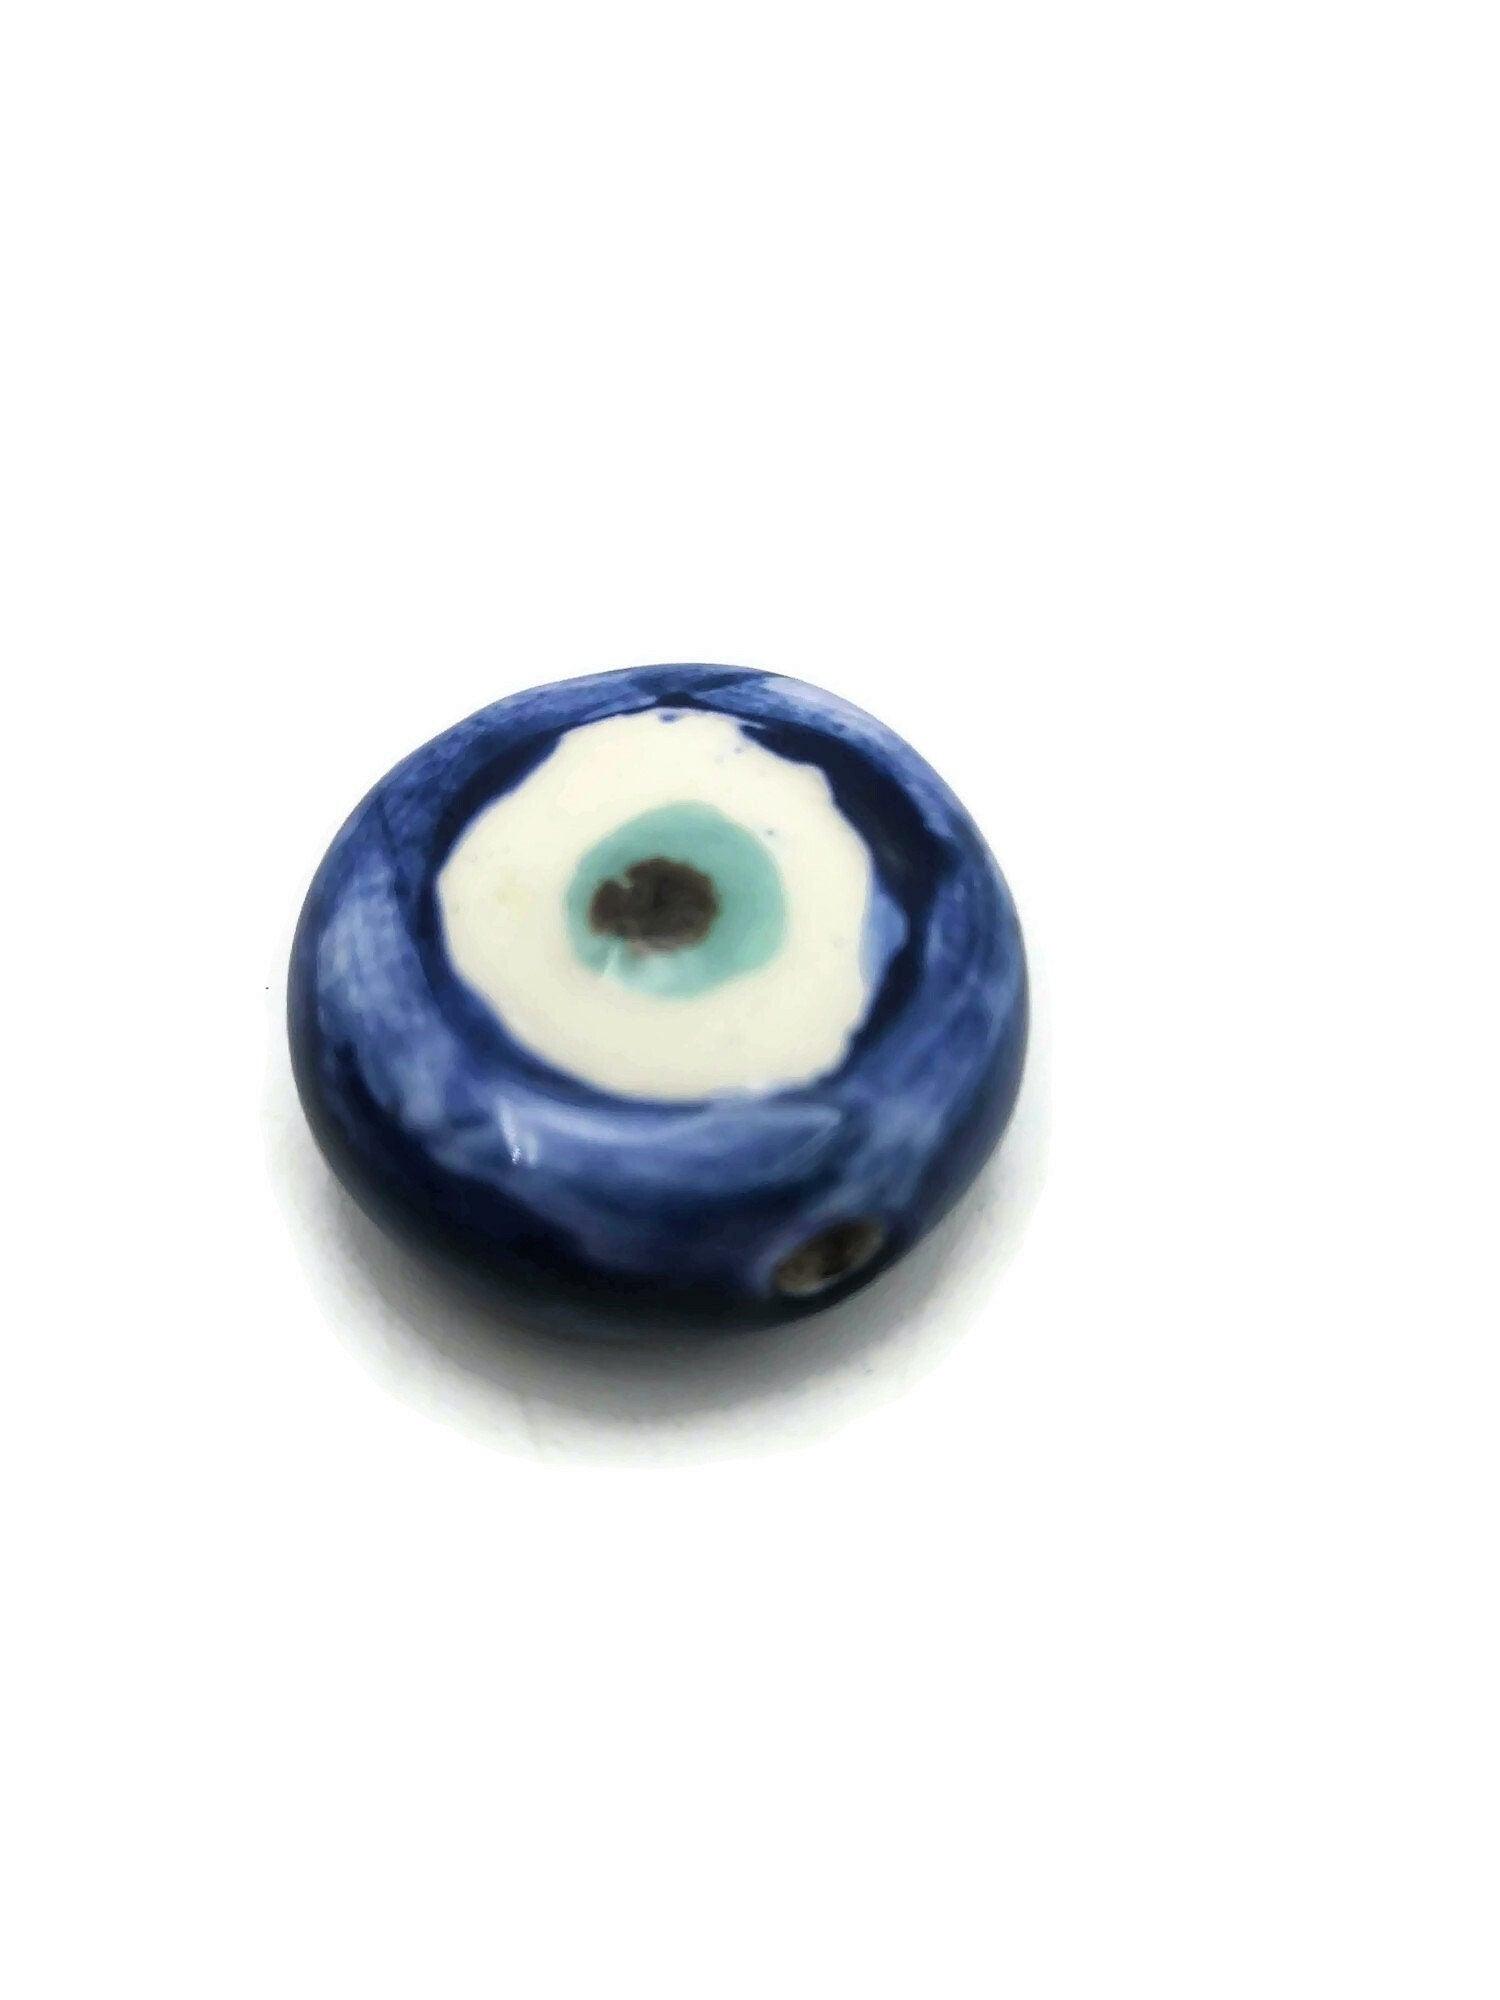 1Pc Blue Evil Eye Beads For Jewelry Making, Handmade Ceramic Macrame Beads, Extra Large Clay Beads, Round Unusual Decorative Porcelain Beads - Ceramica Ana Rafael